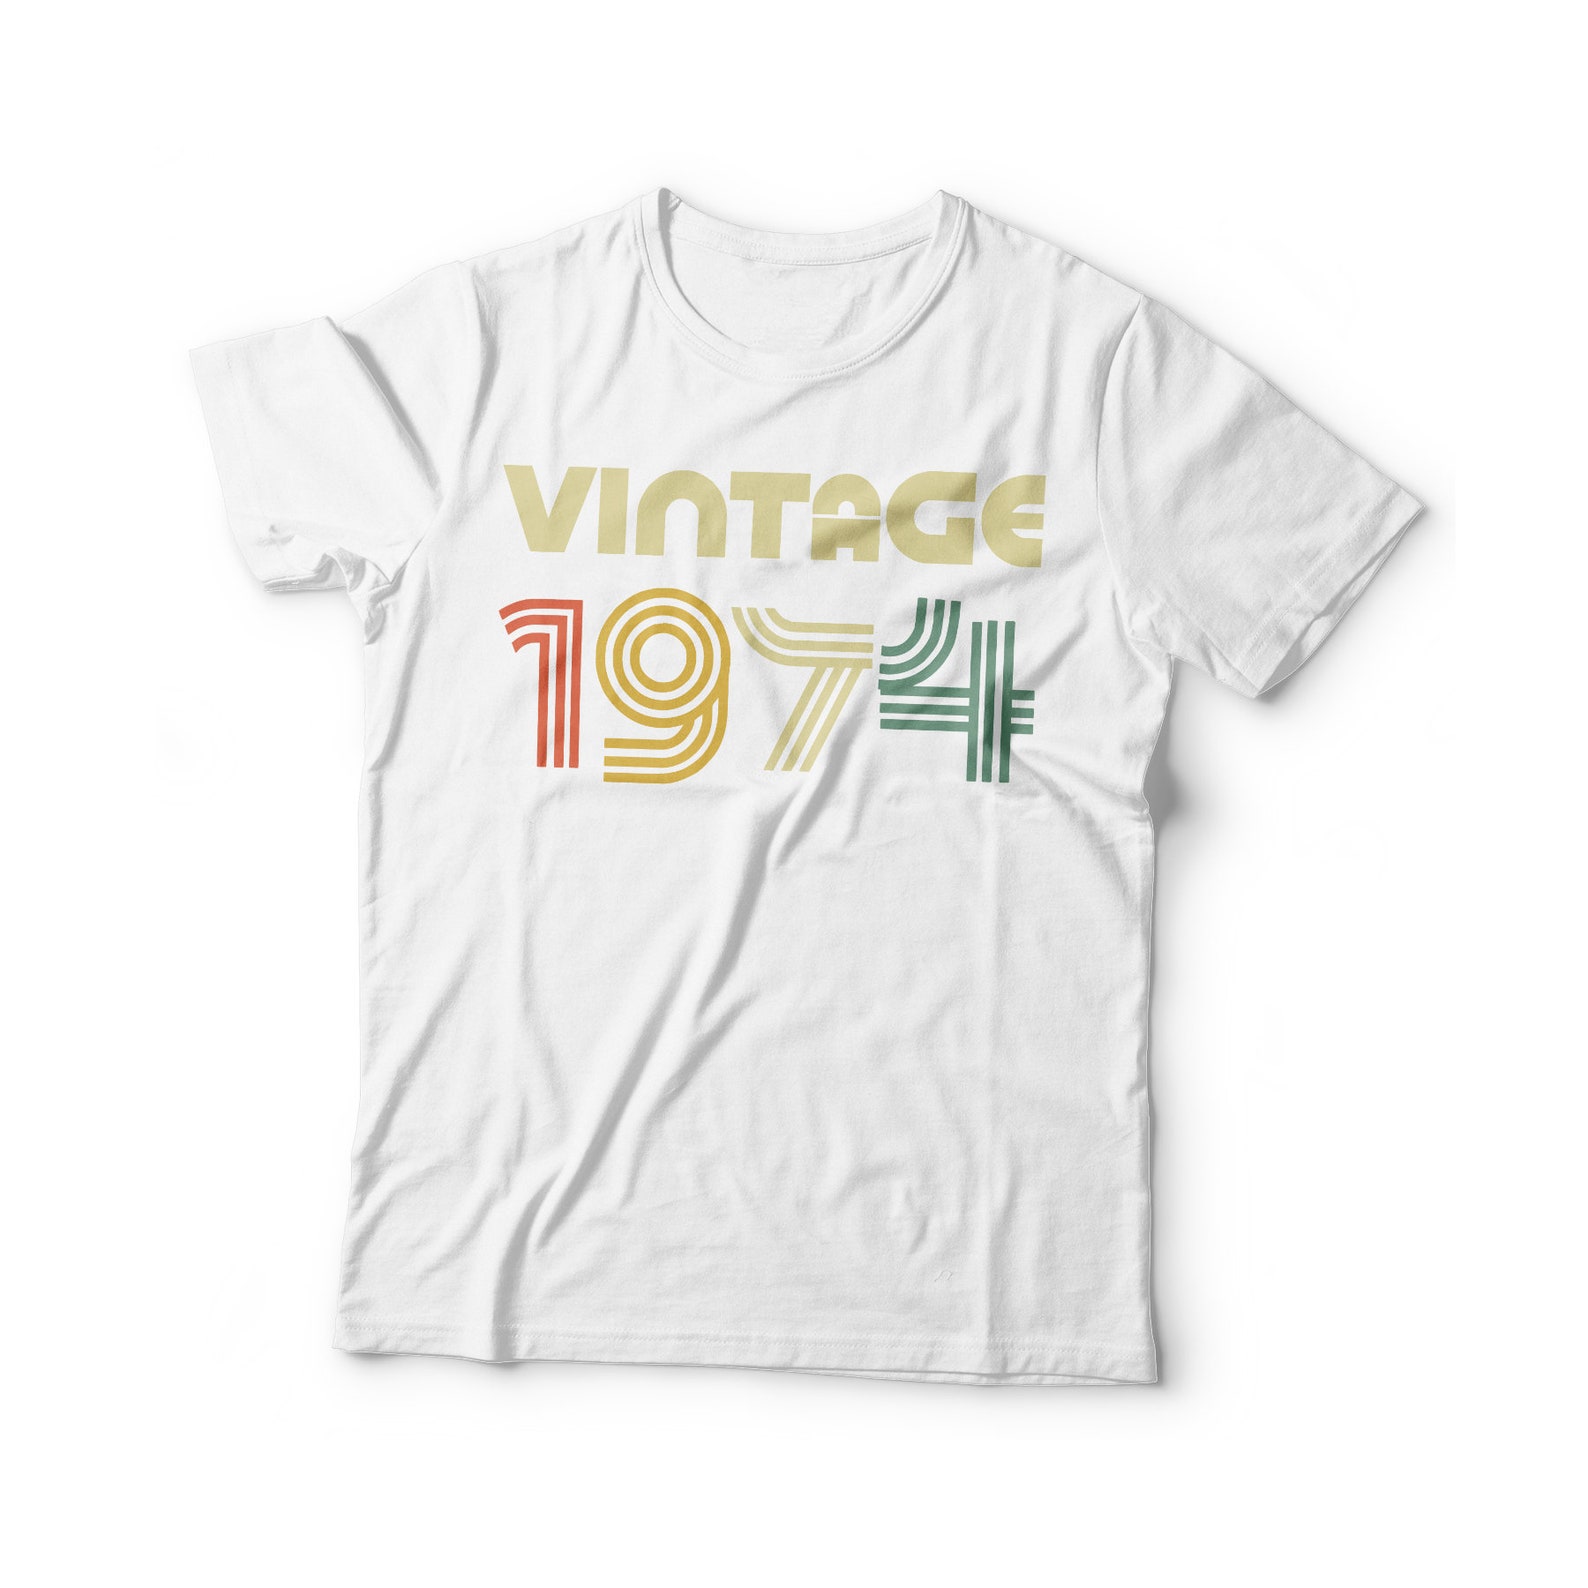 Vintage 1974 T-shirt Unisex Women Men Funny Retro Font 48th | Etsy